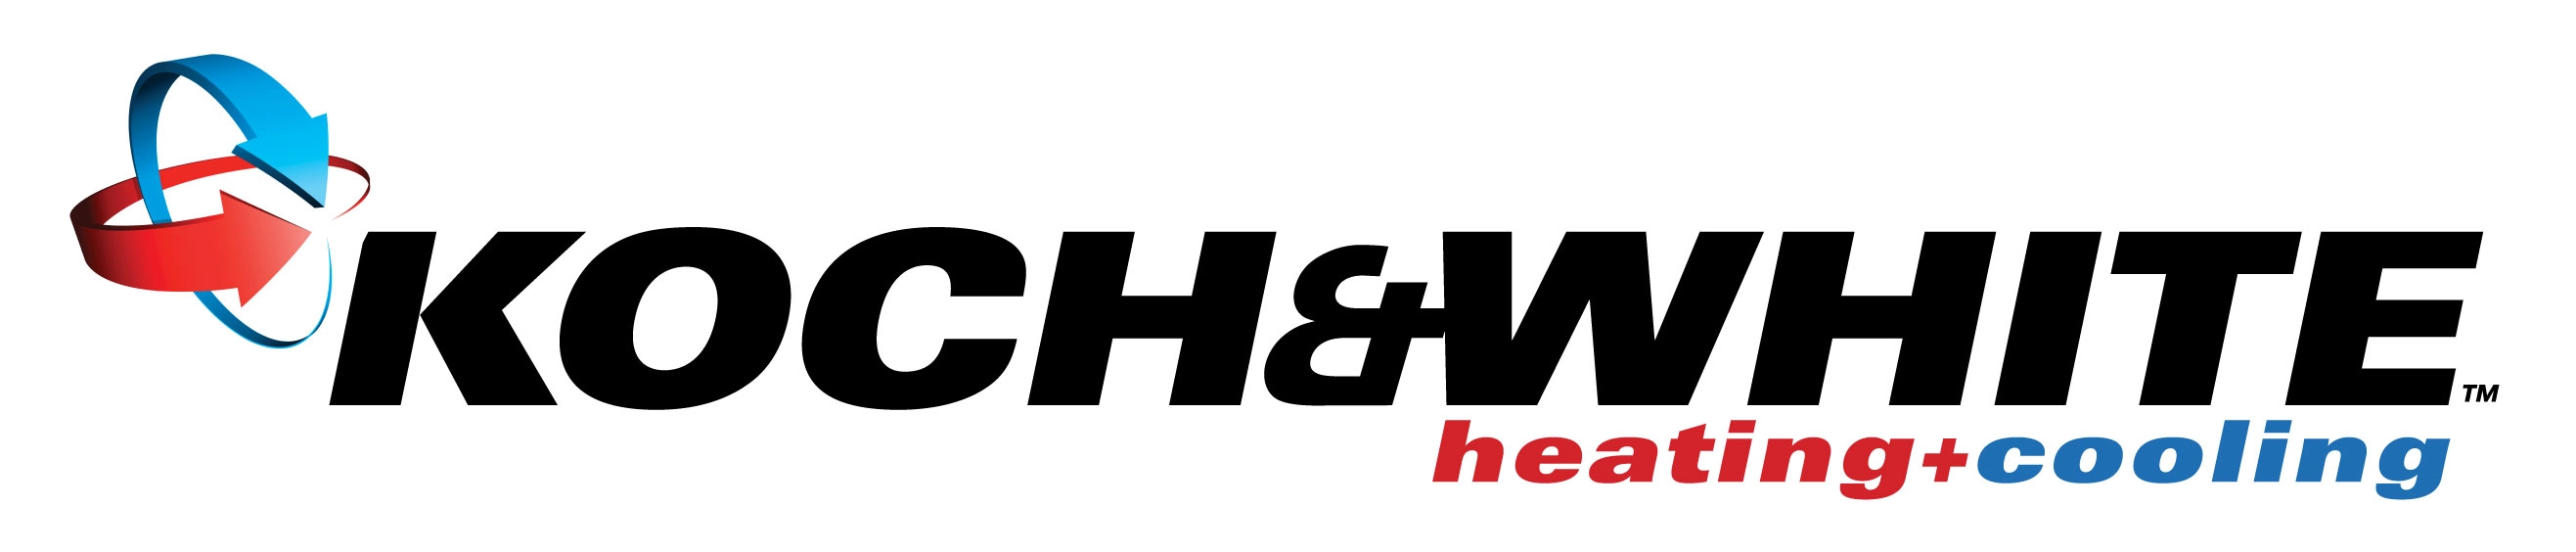 Koch & White Heating & Cooling Inc Logo